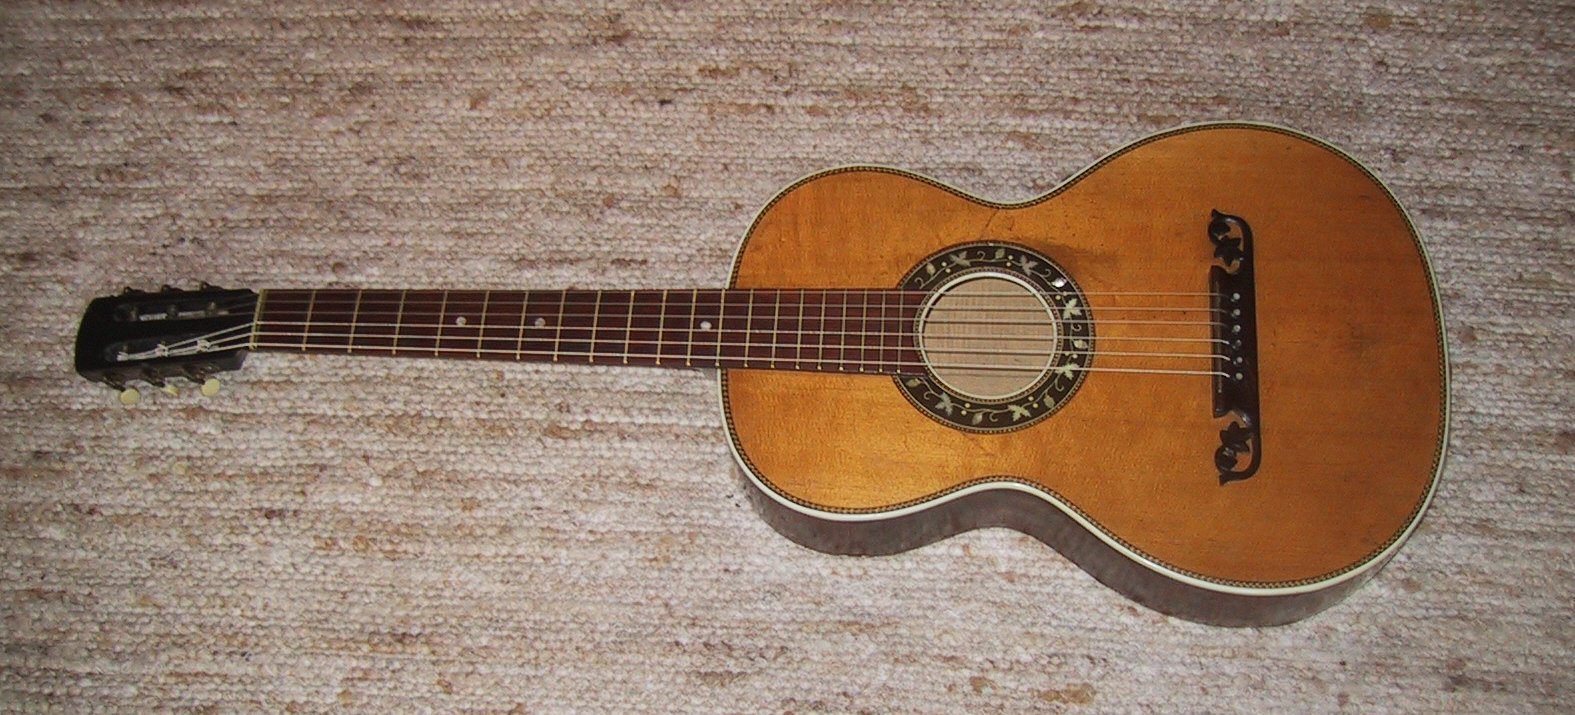 MIS_0156 Gitarre (Geschichts- und Heimatverein Eglofs e.V. CC BY-NC-SA)